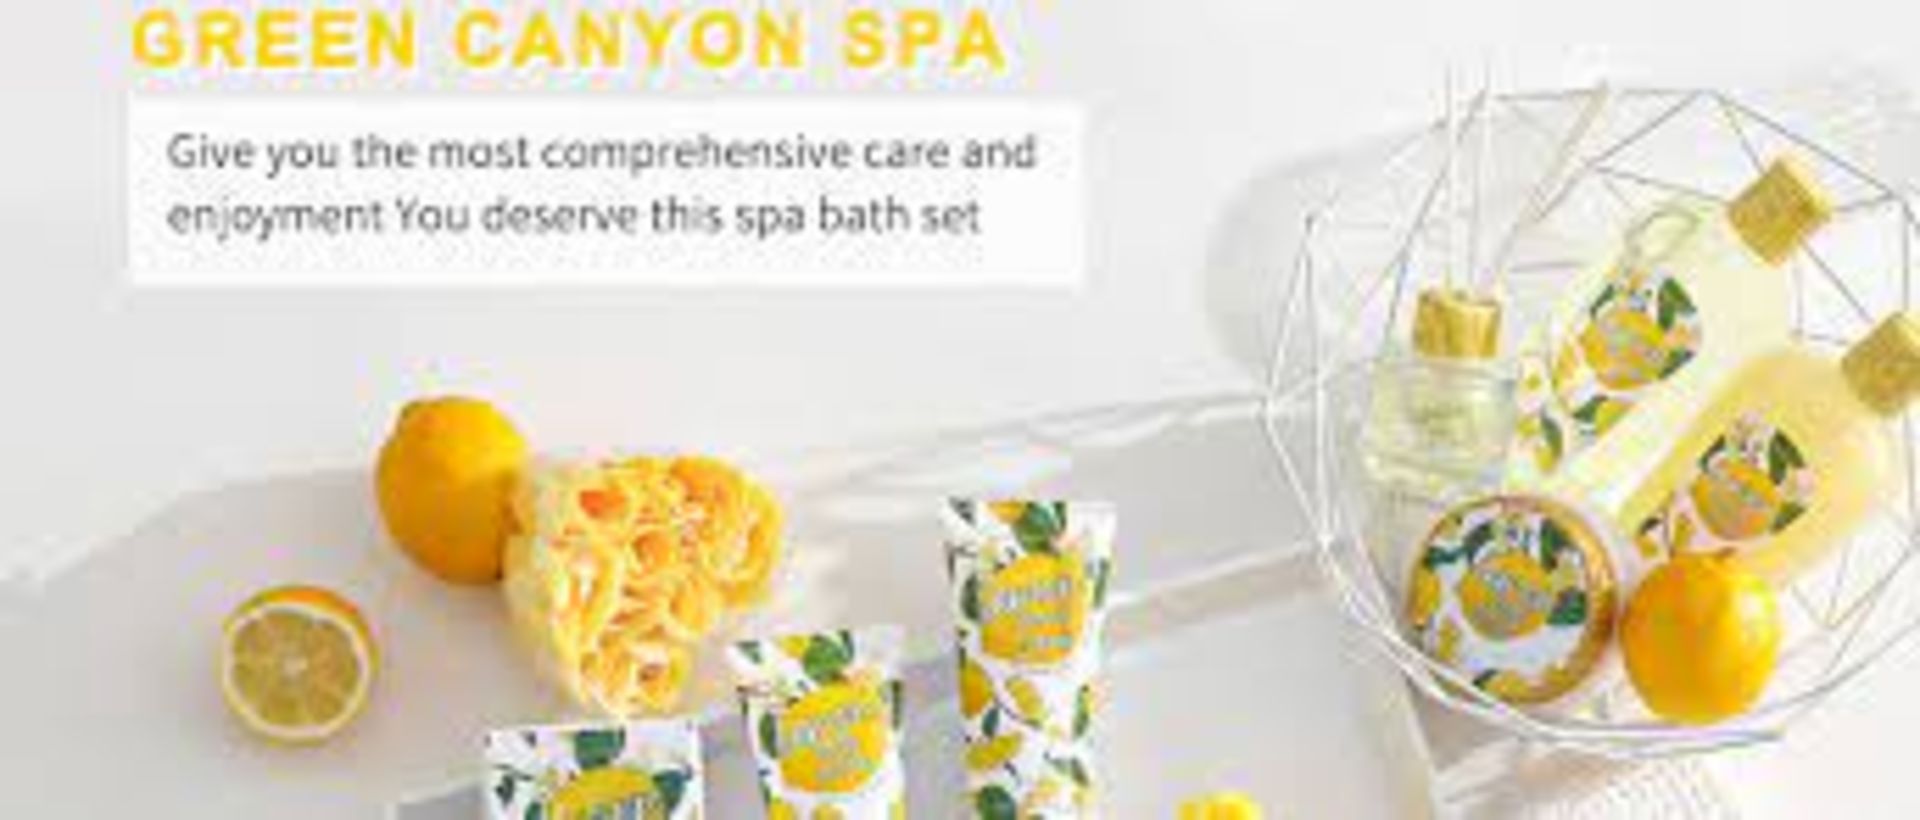 TRADE LOT 24 X NEW PACKAGED Lemon Everyday Bath Set Tote Gift Sets. (SKU: BEL-SC-03). Home Spa Kit - Image 2 of 2